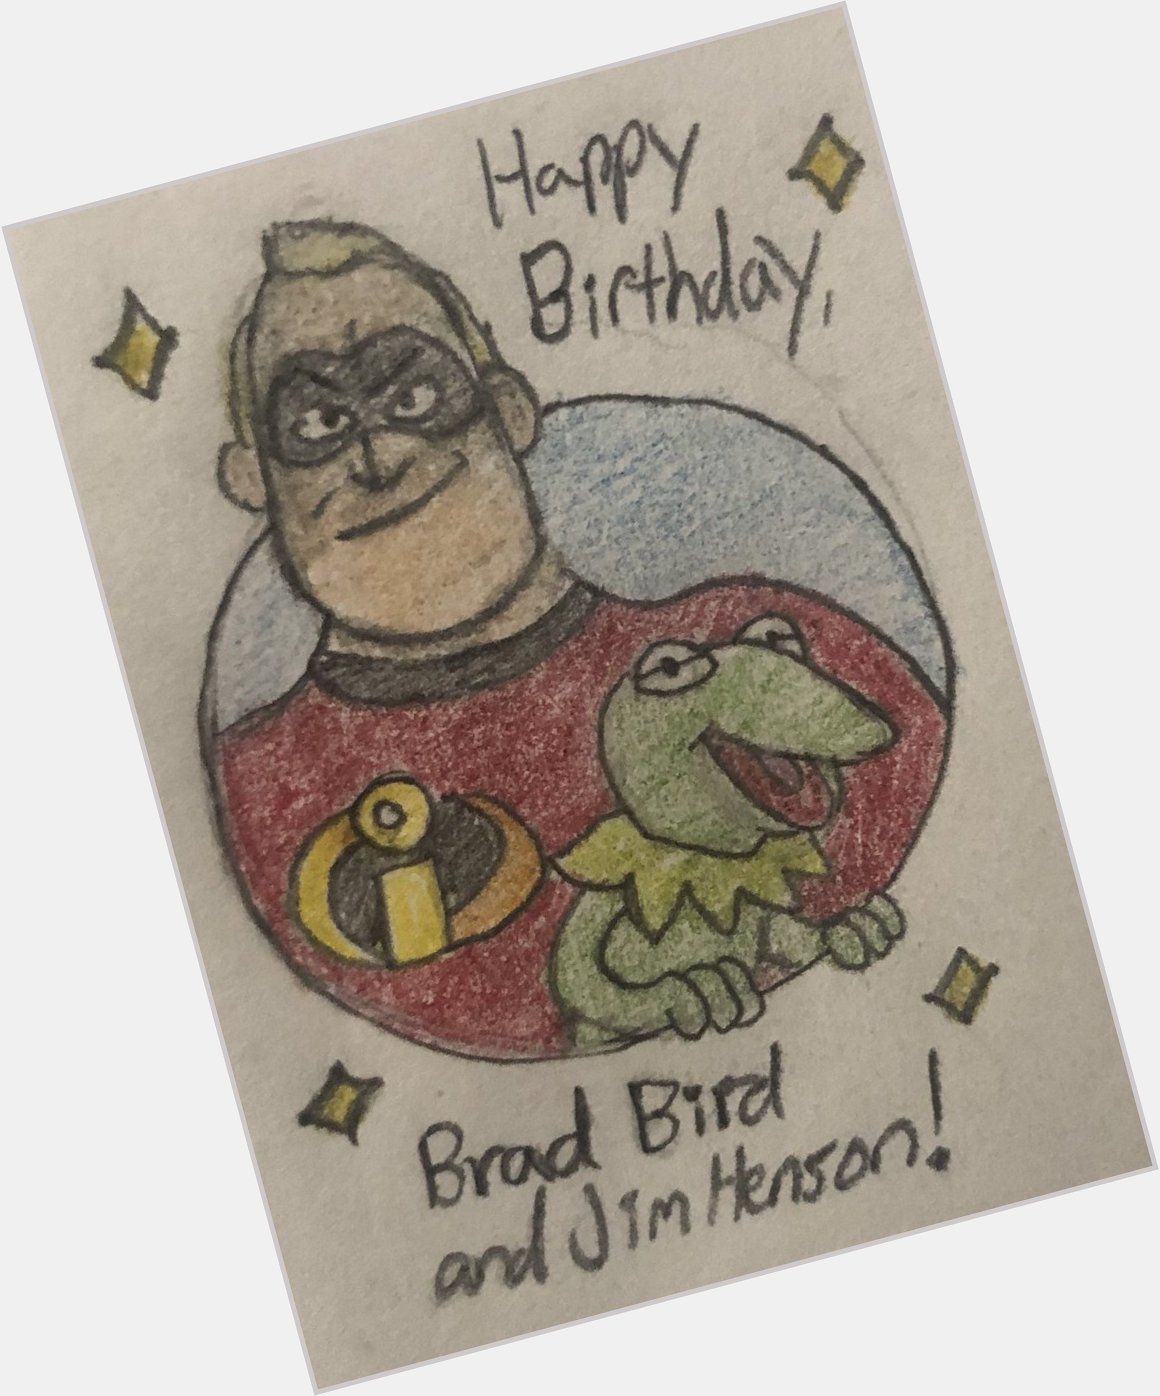 Happy Birthday, Brad Bird and Jim Henson!        